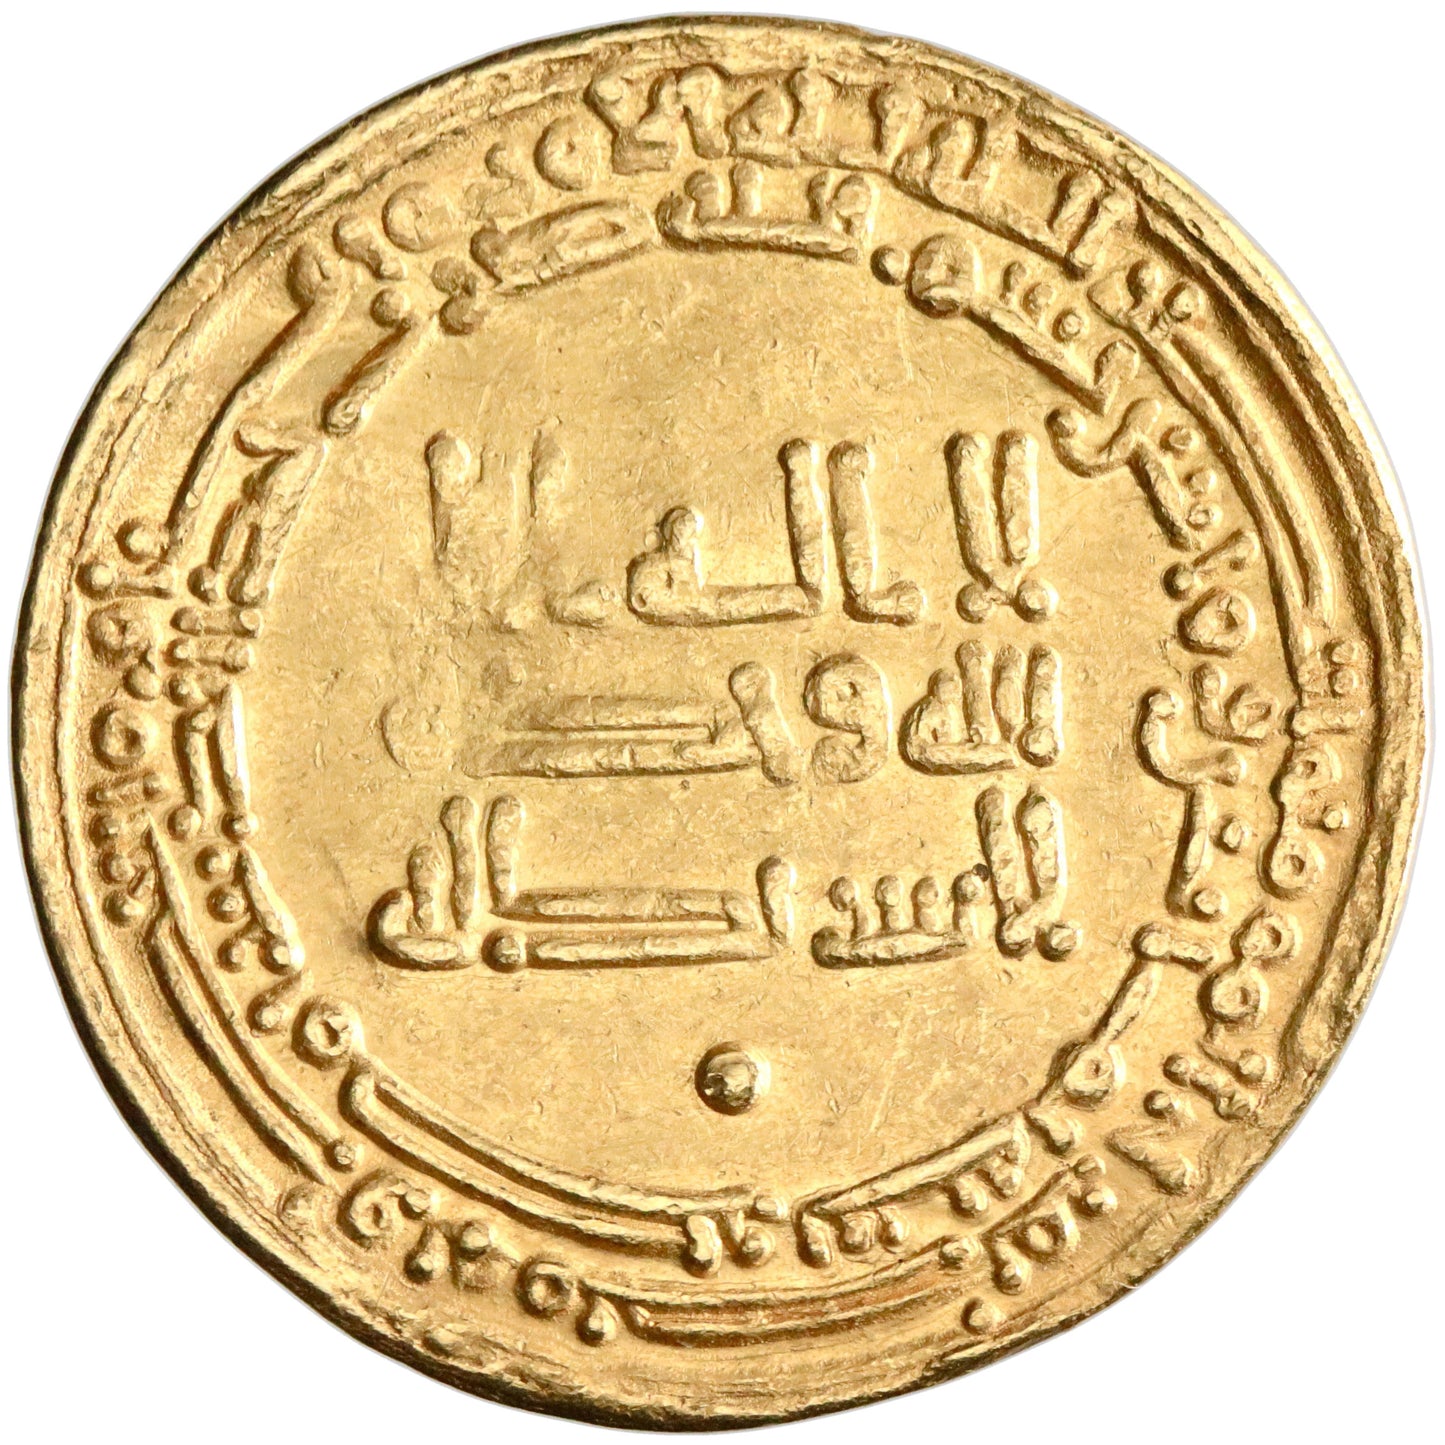 Tulunid, Khumarawayh ibn Ahmad, gold dinar, Misr (Egypt) mint, AH 280, citing al-Mu'tadid